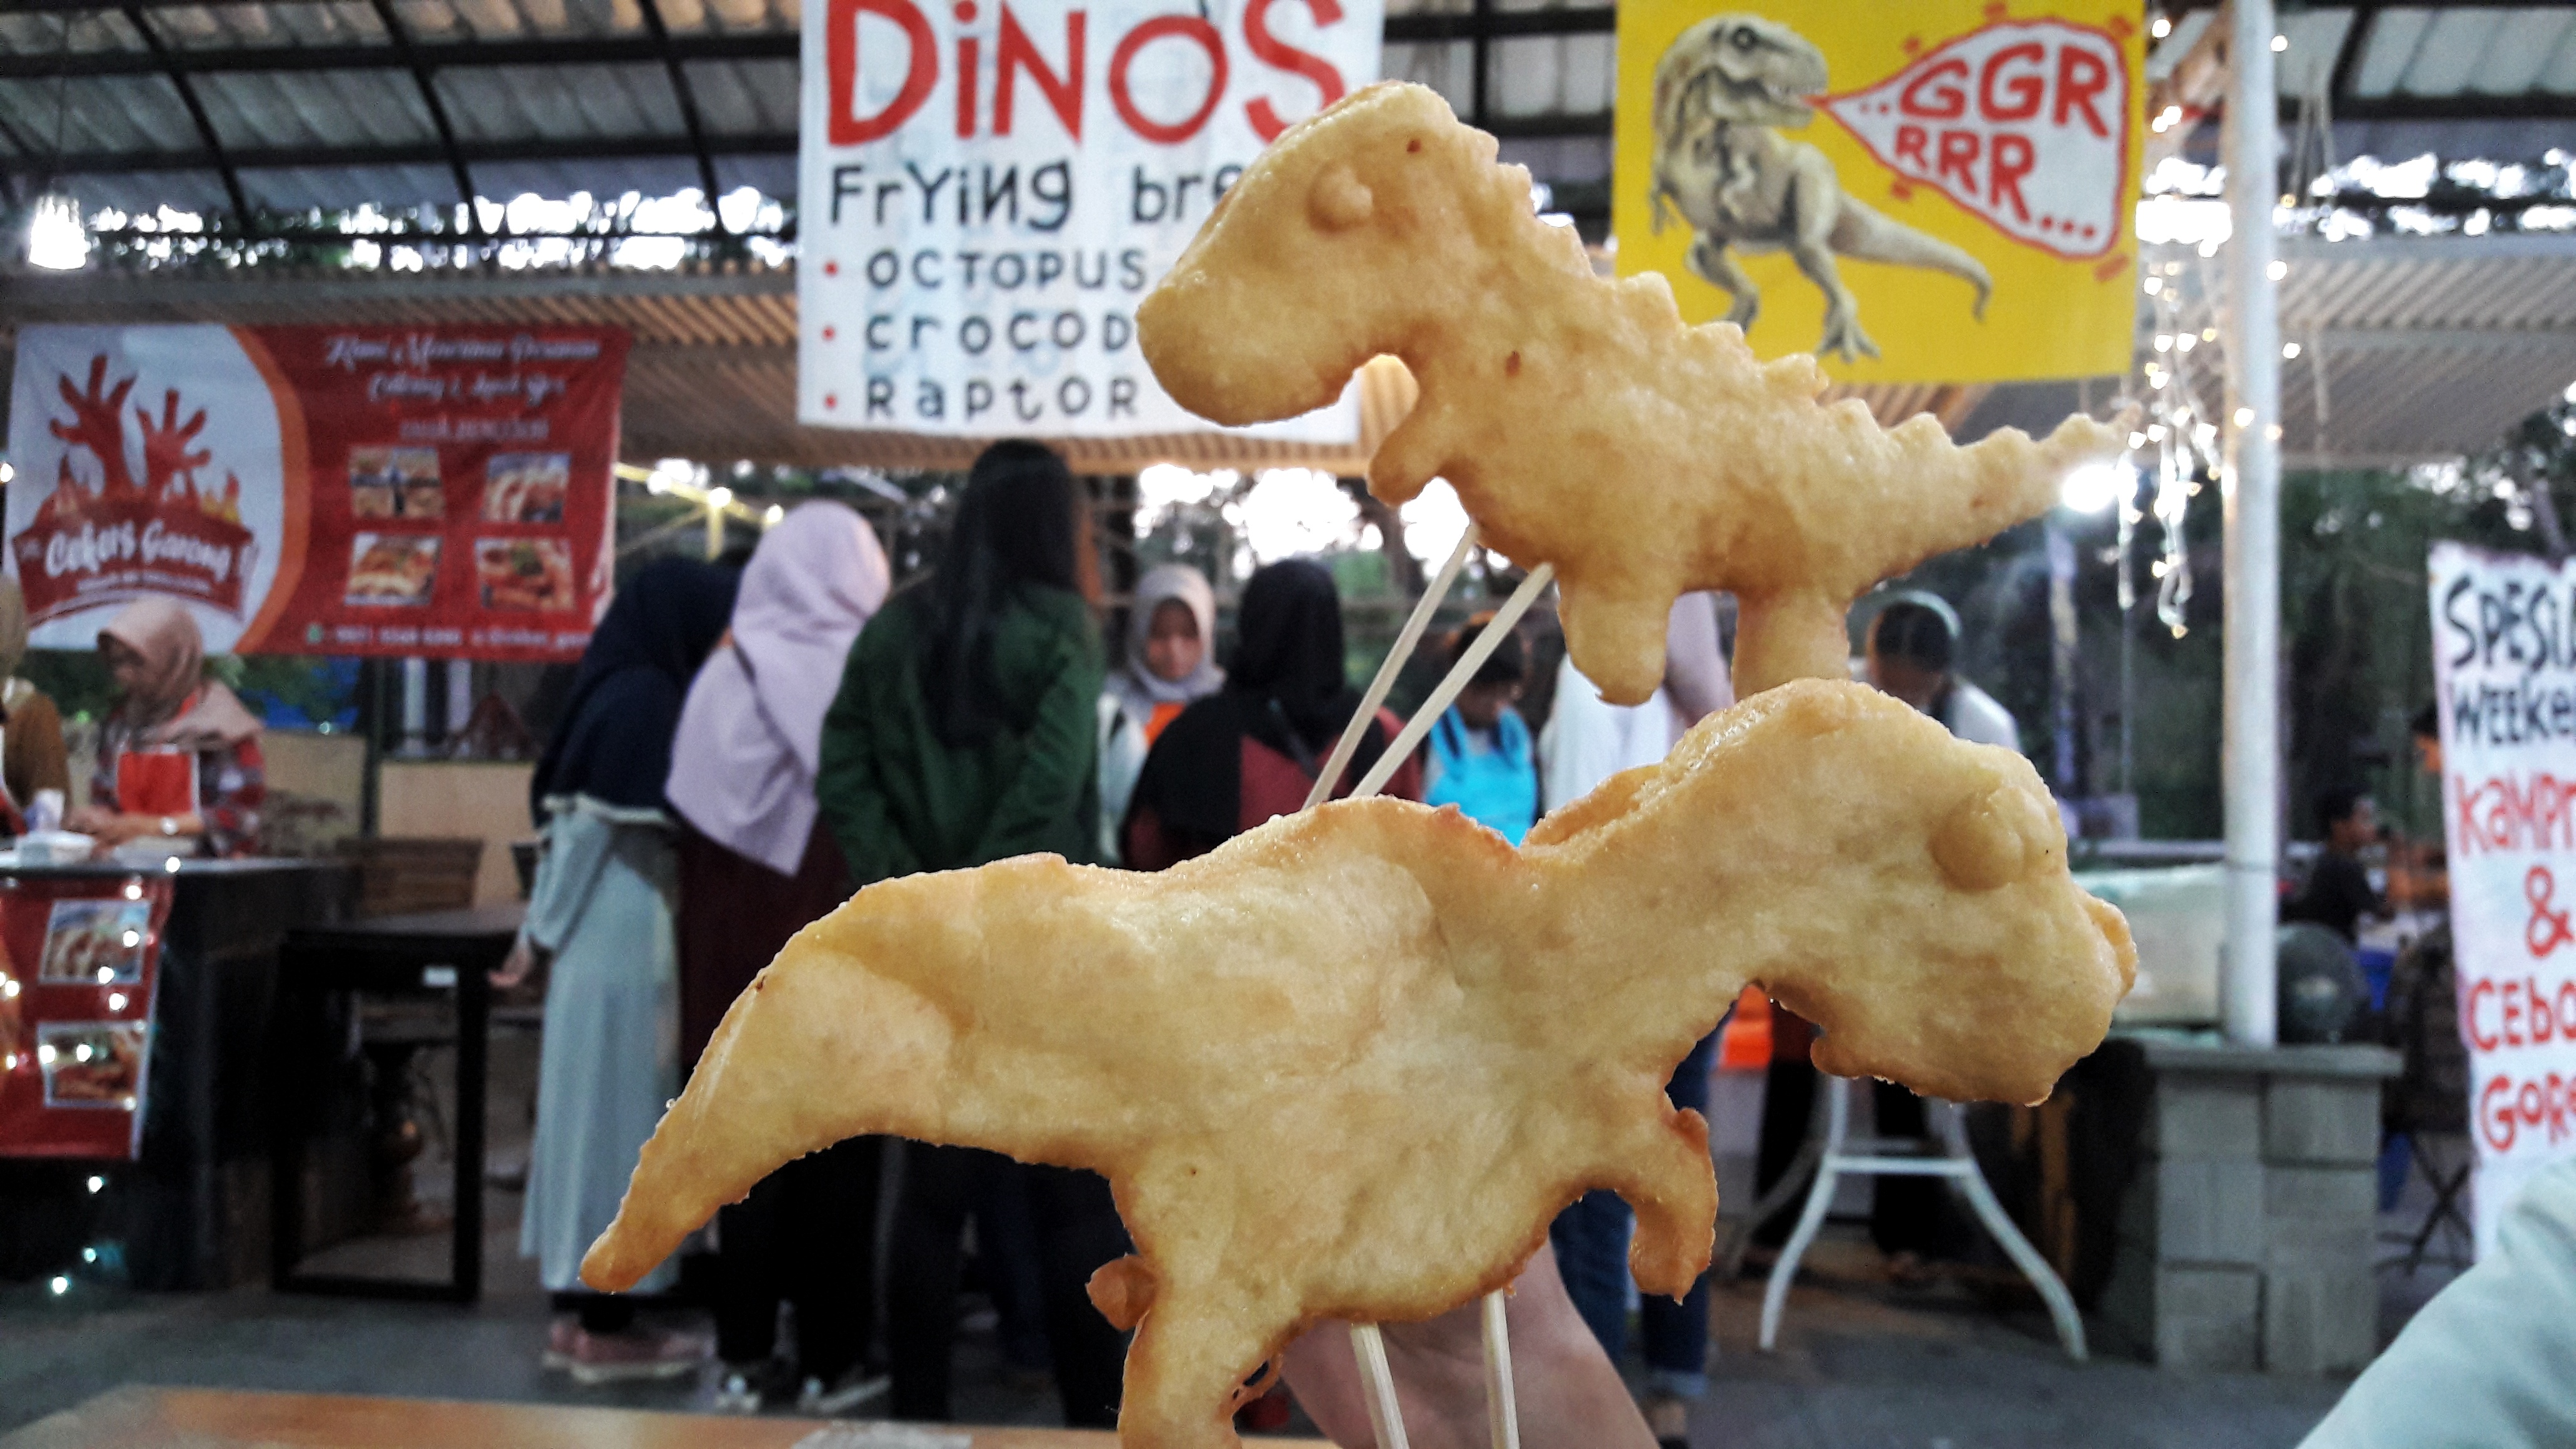 Kue Goreng Dino dan Raptor (c) Annissa Saputri/Travelingyuk